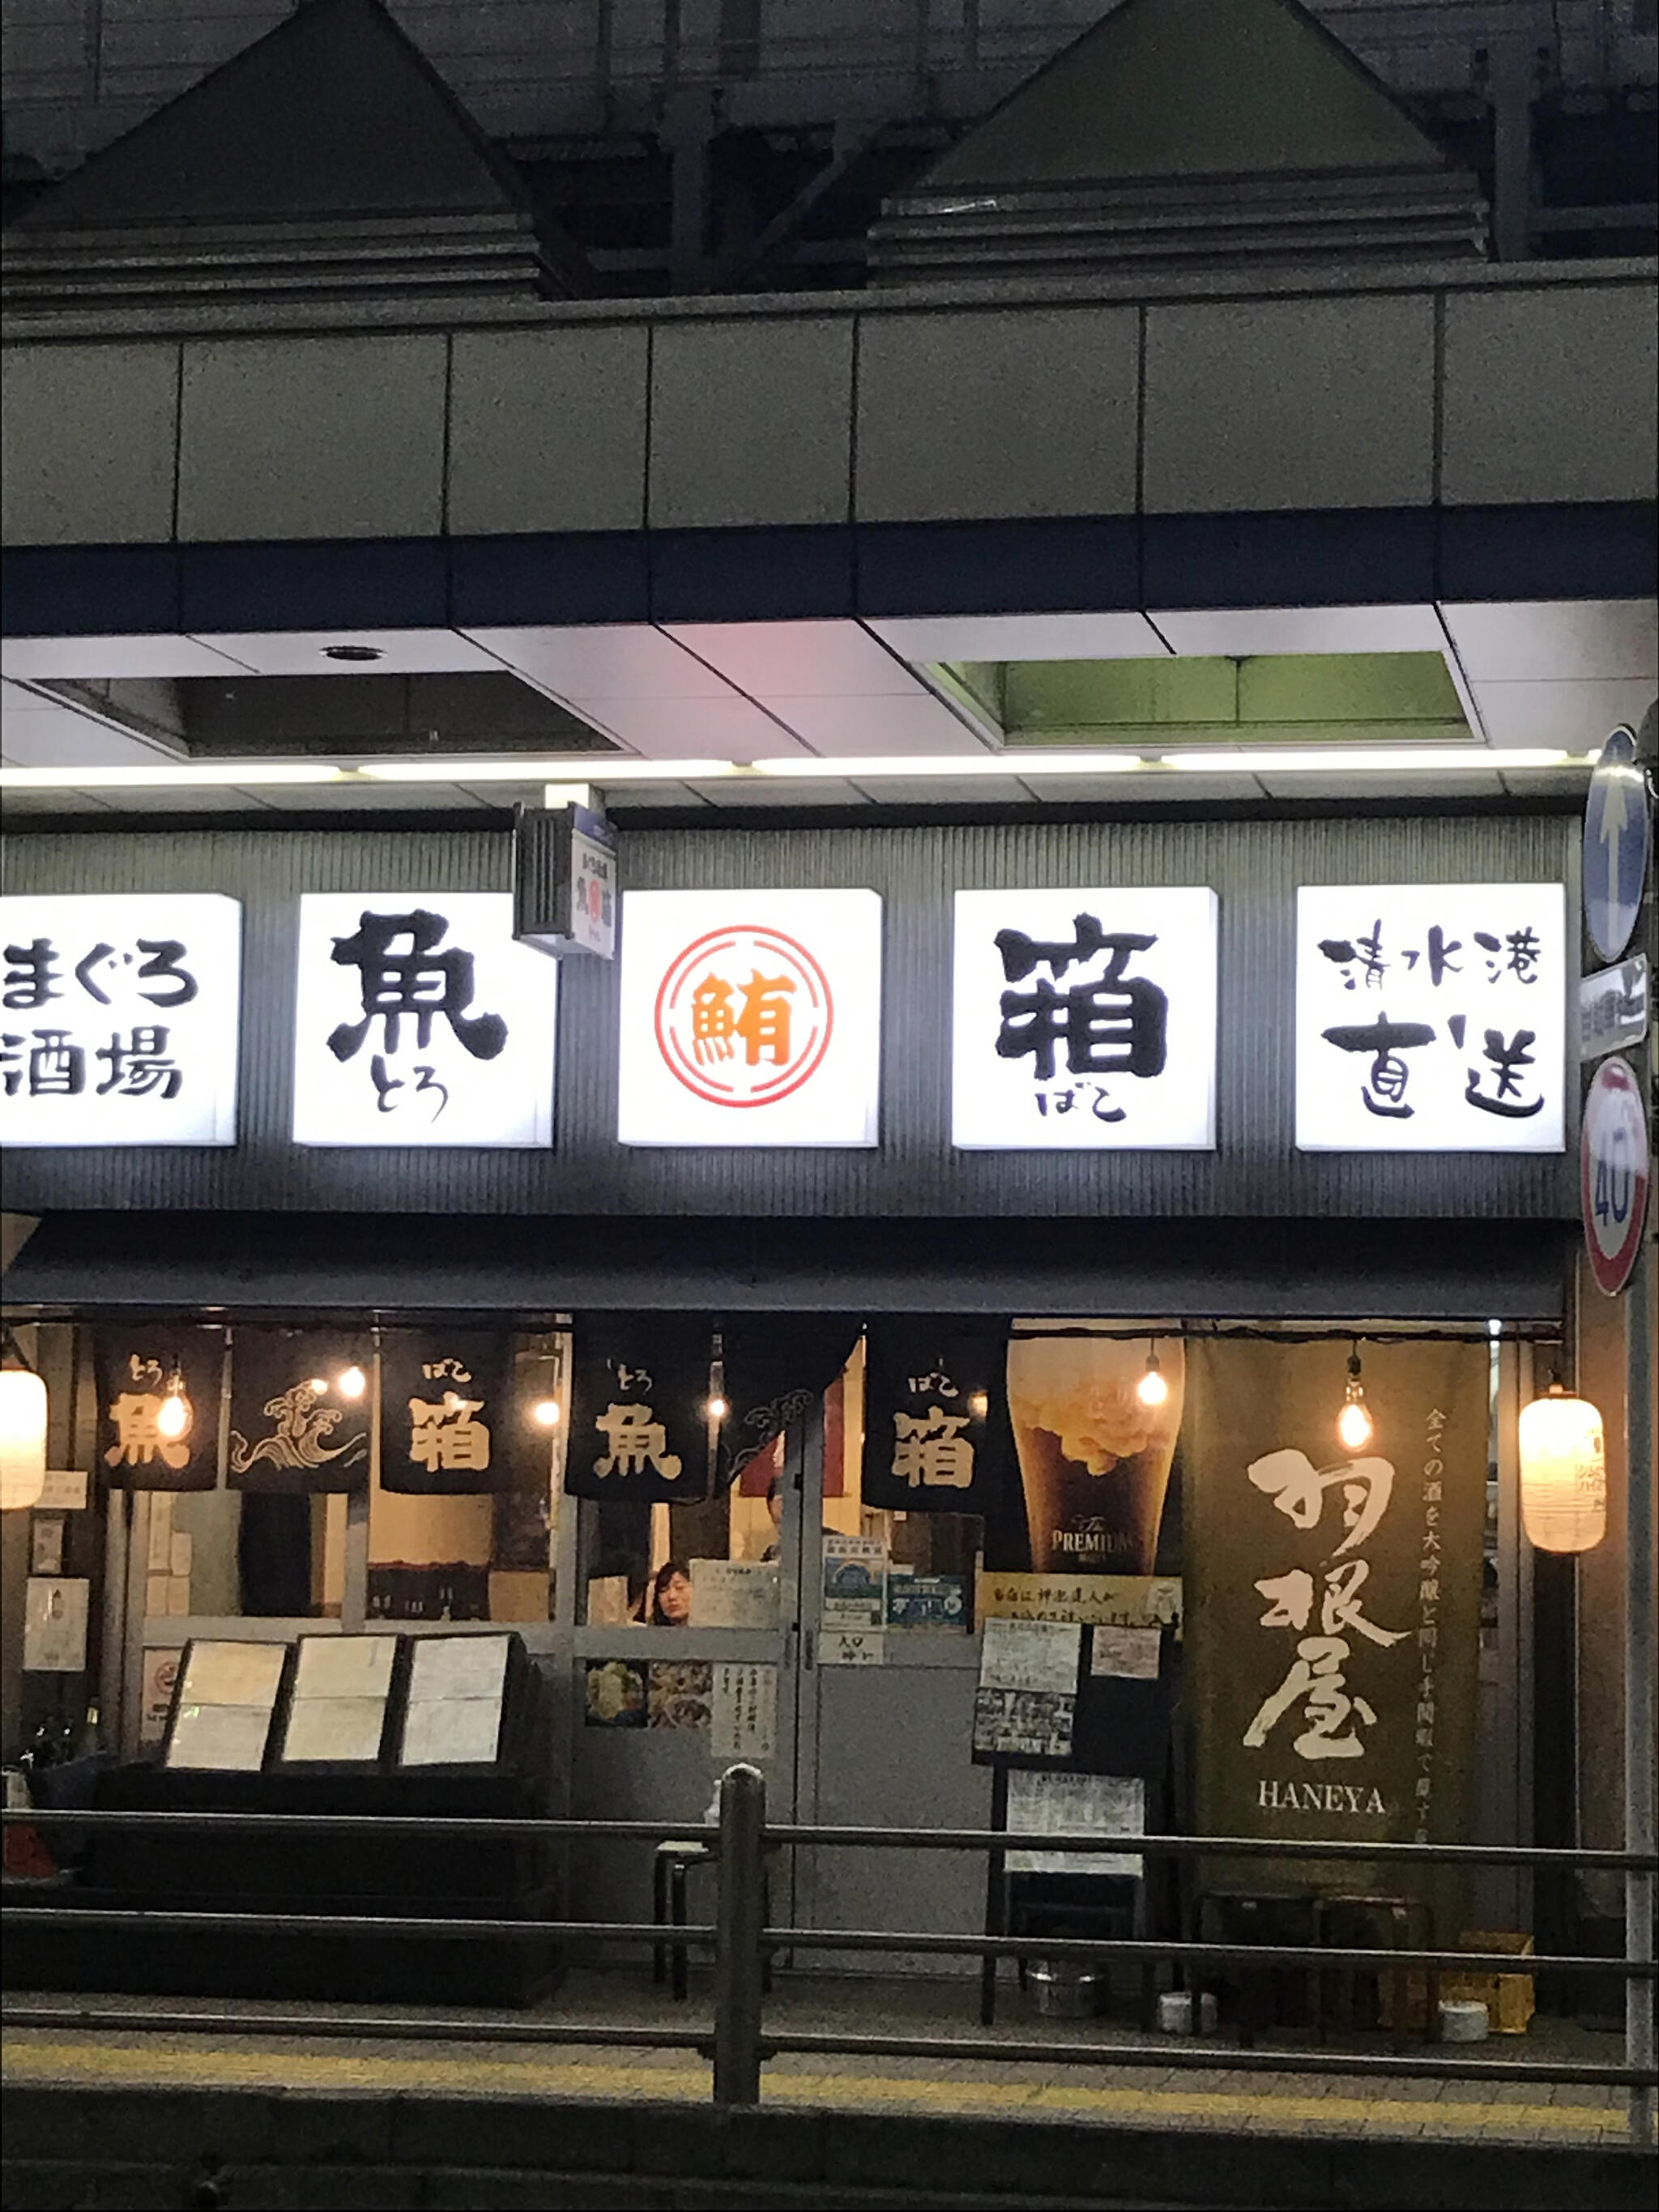 魚箱 大井町店の代表写真4